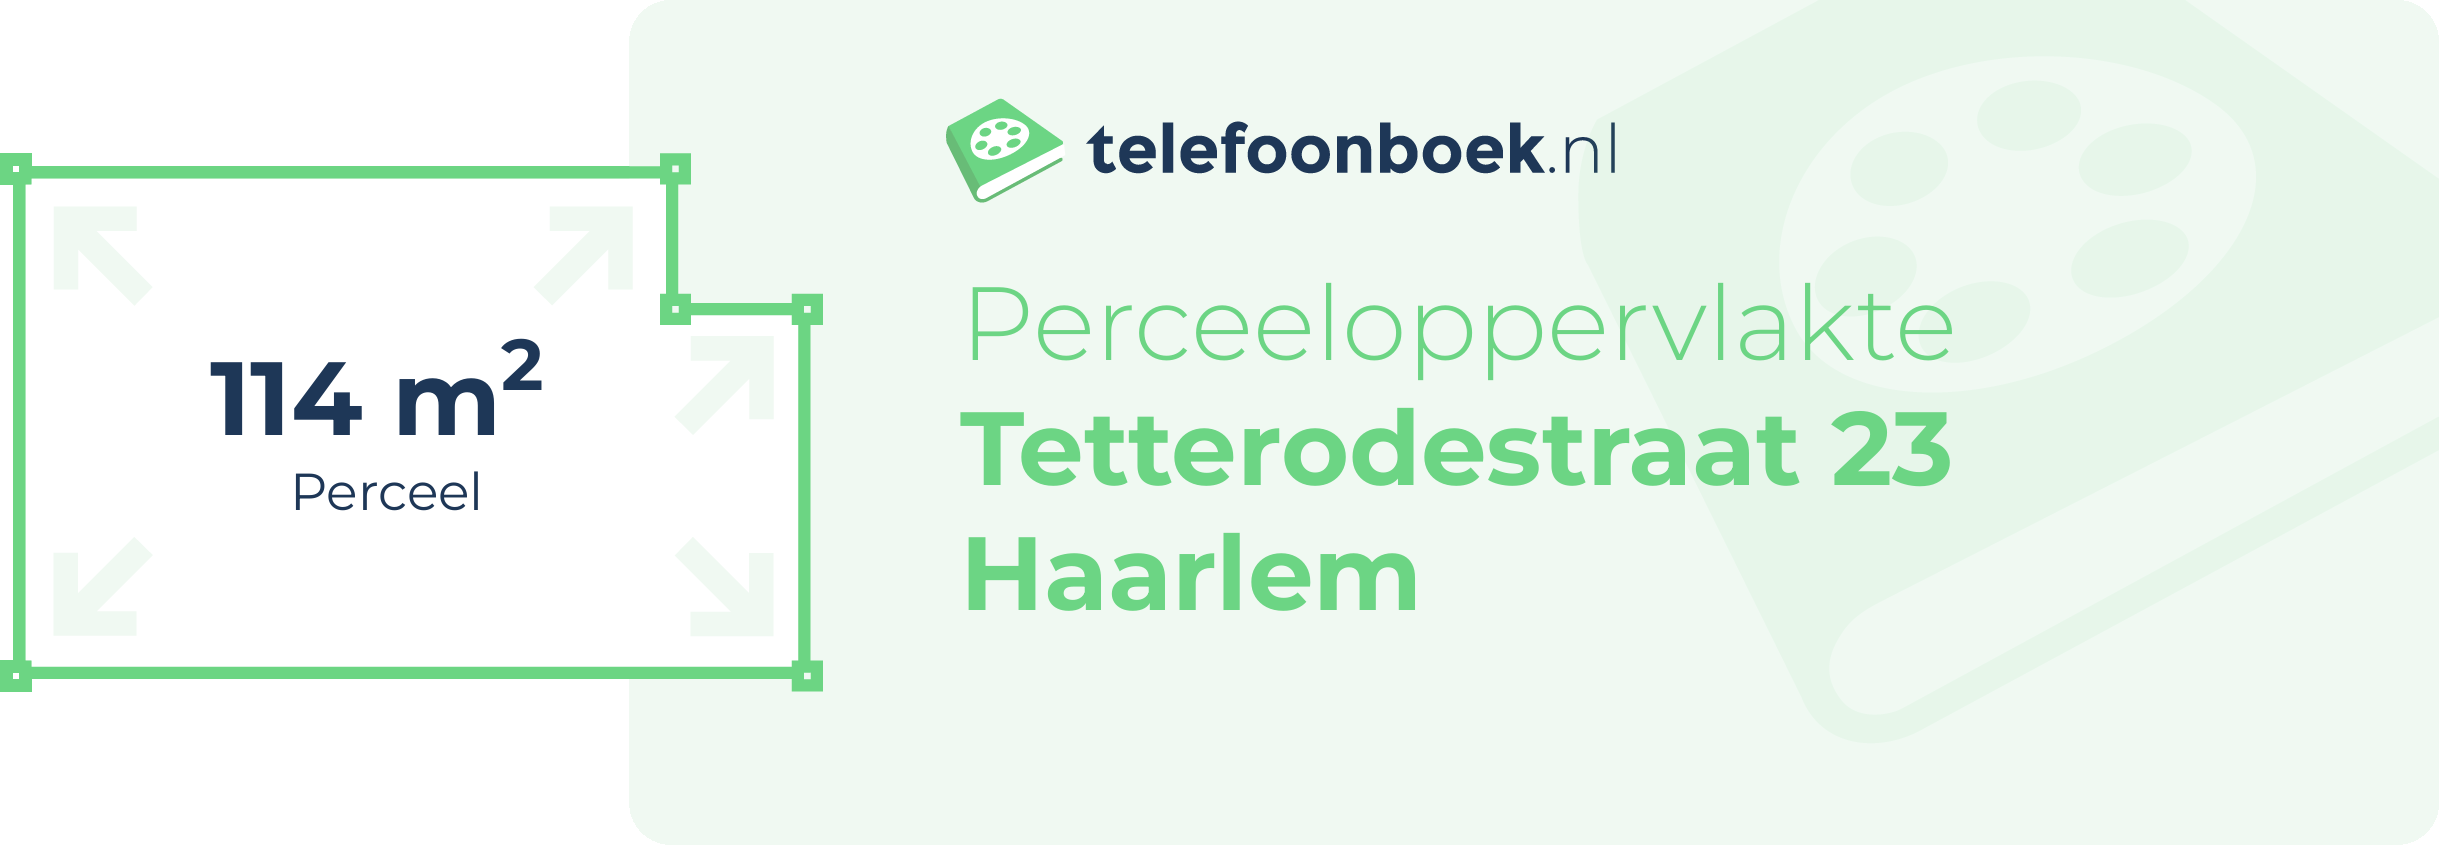 Perceeloppervlakte Tetterodestraat 23 Haarlem